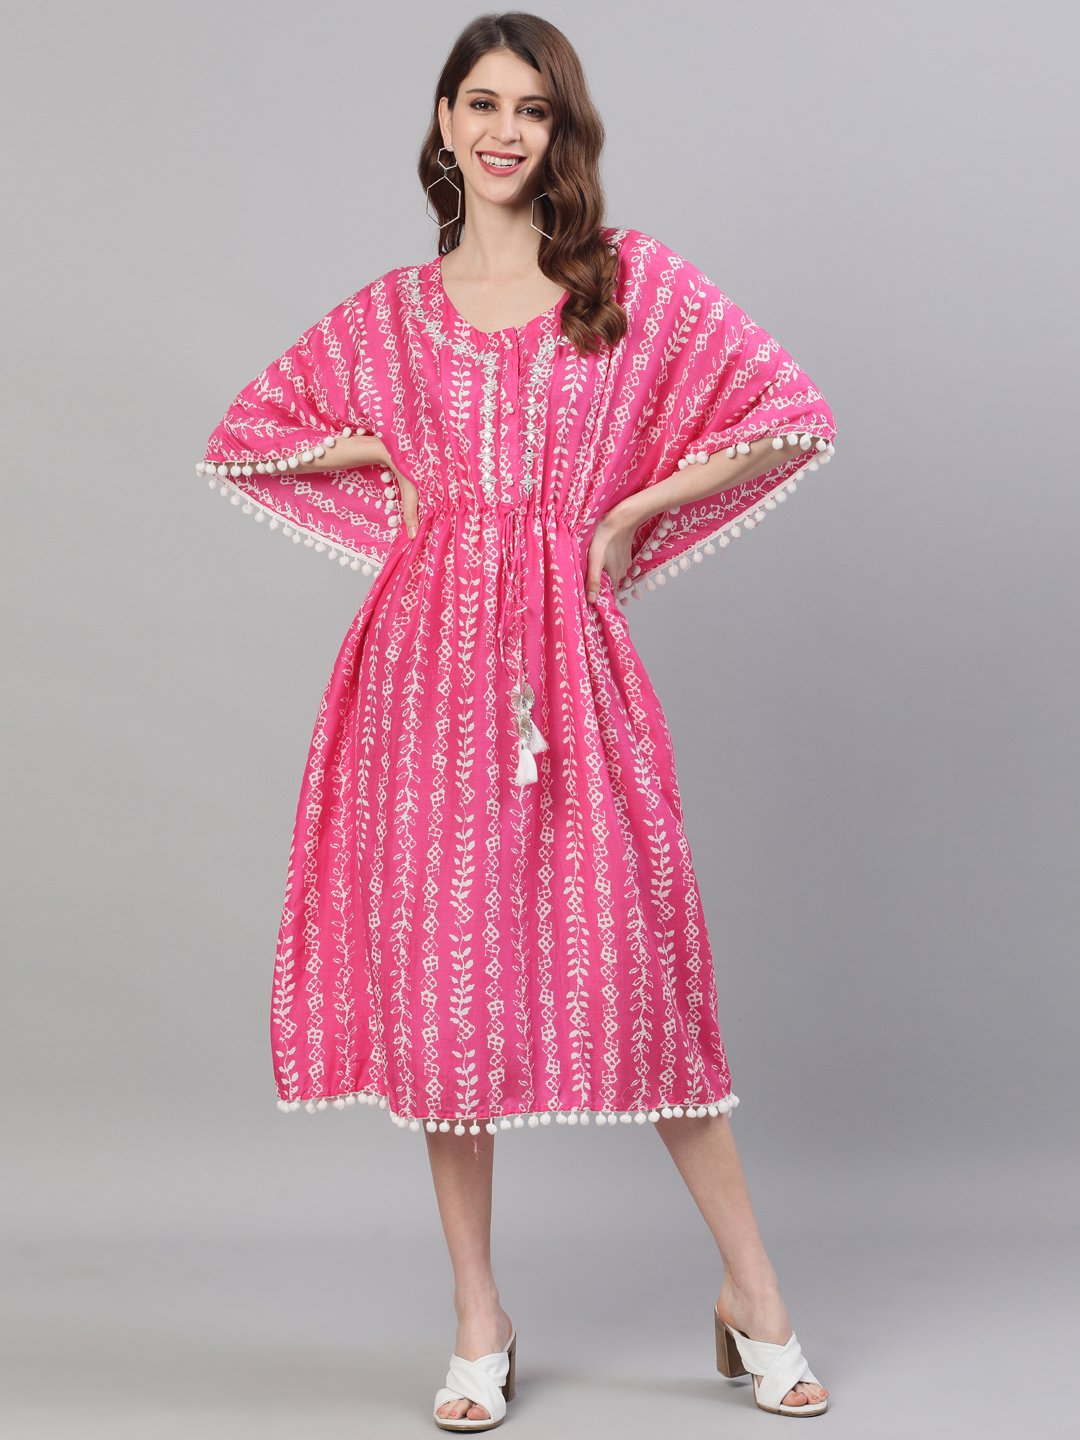 Ishin Women's Pink Embroidered Kaftan Dress